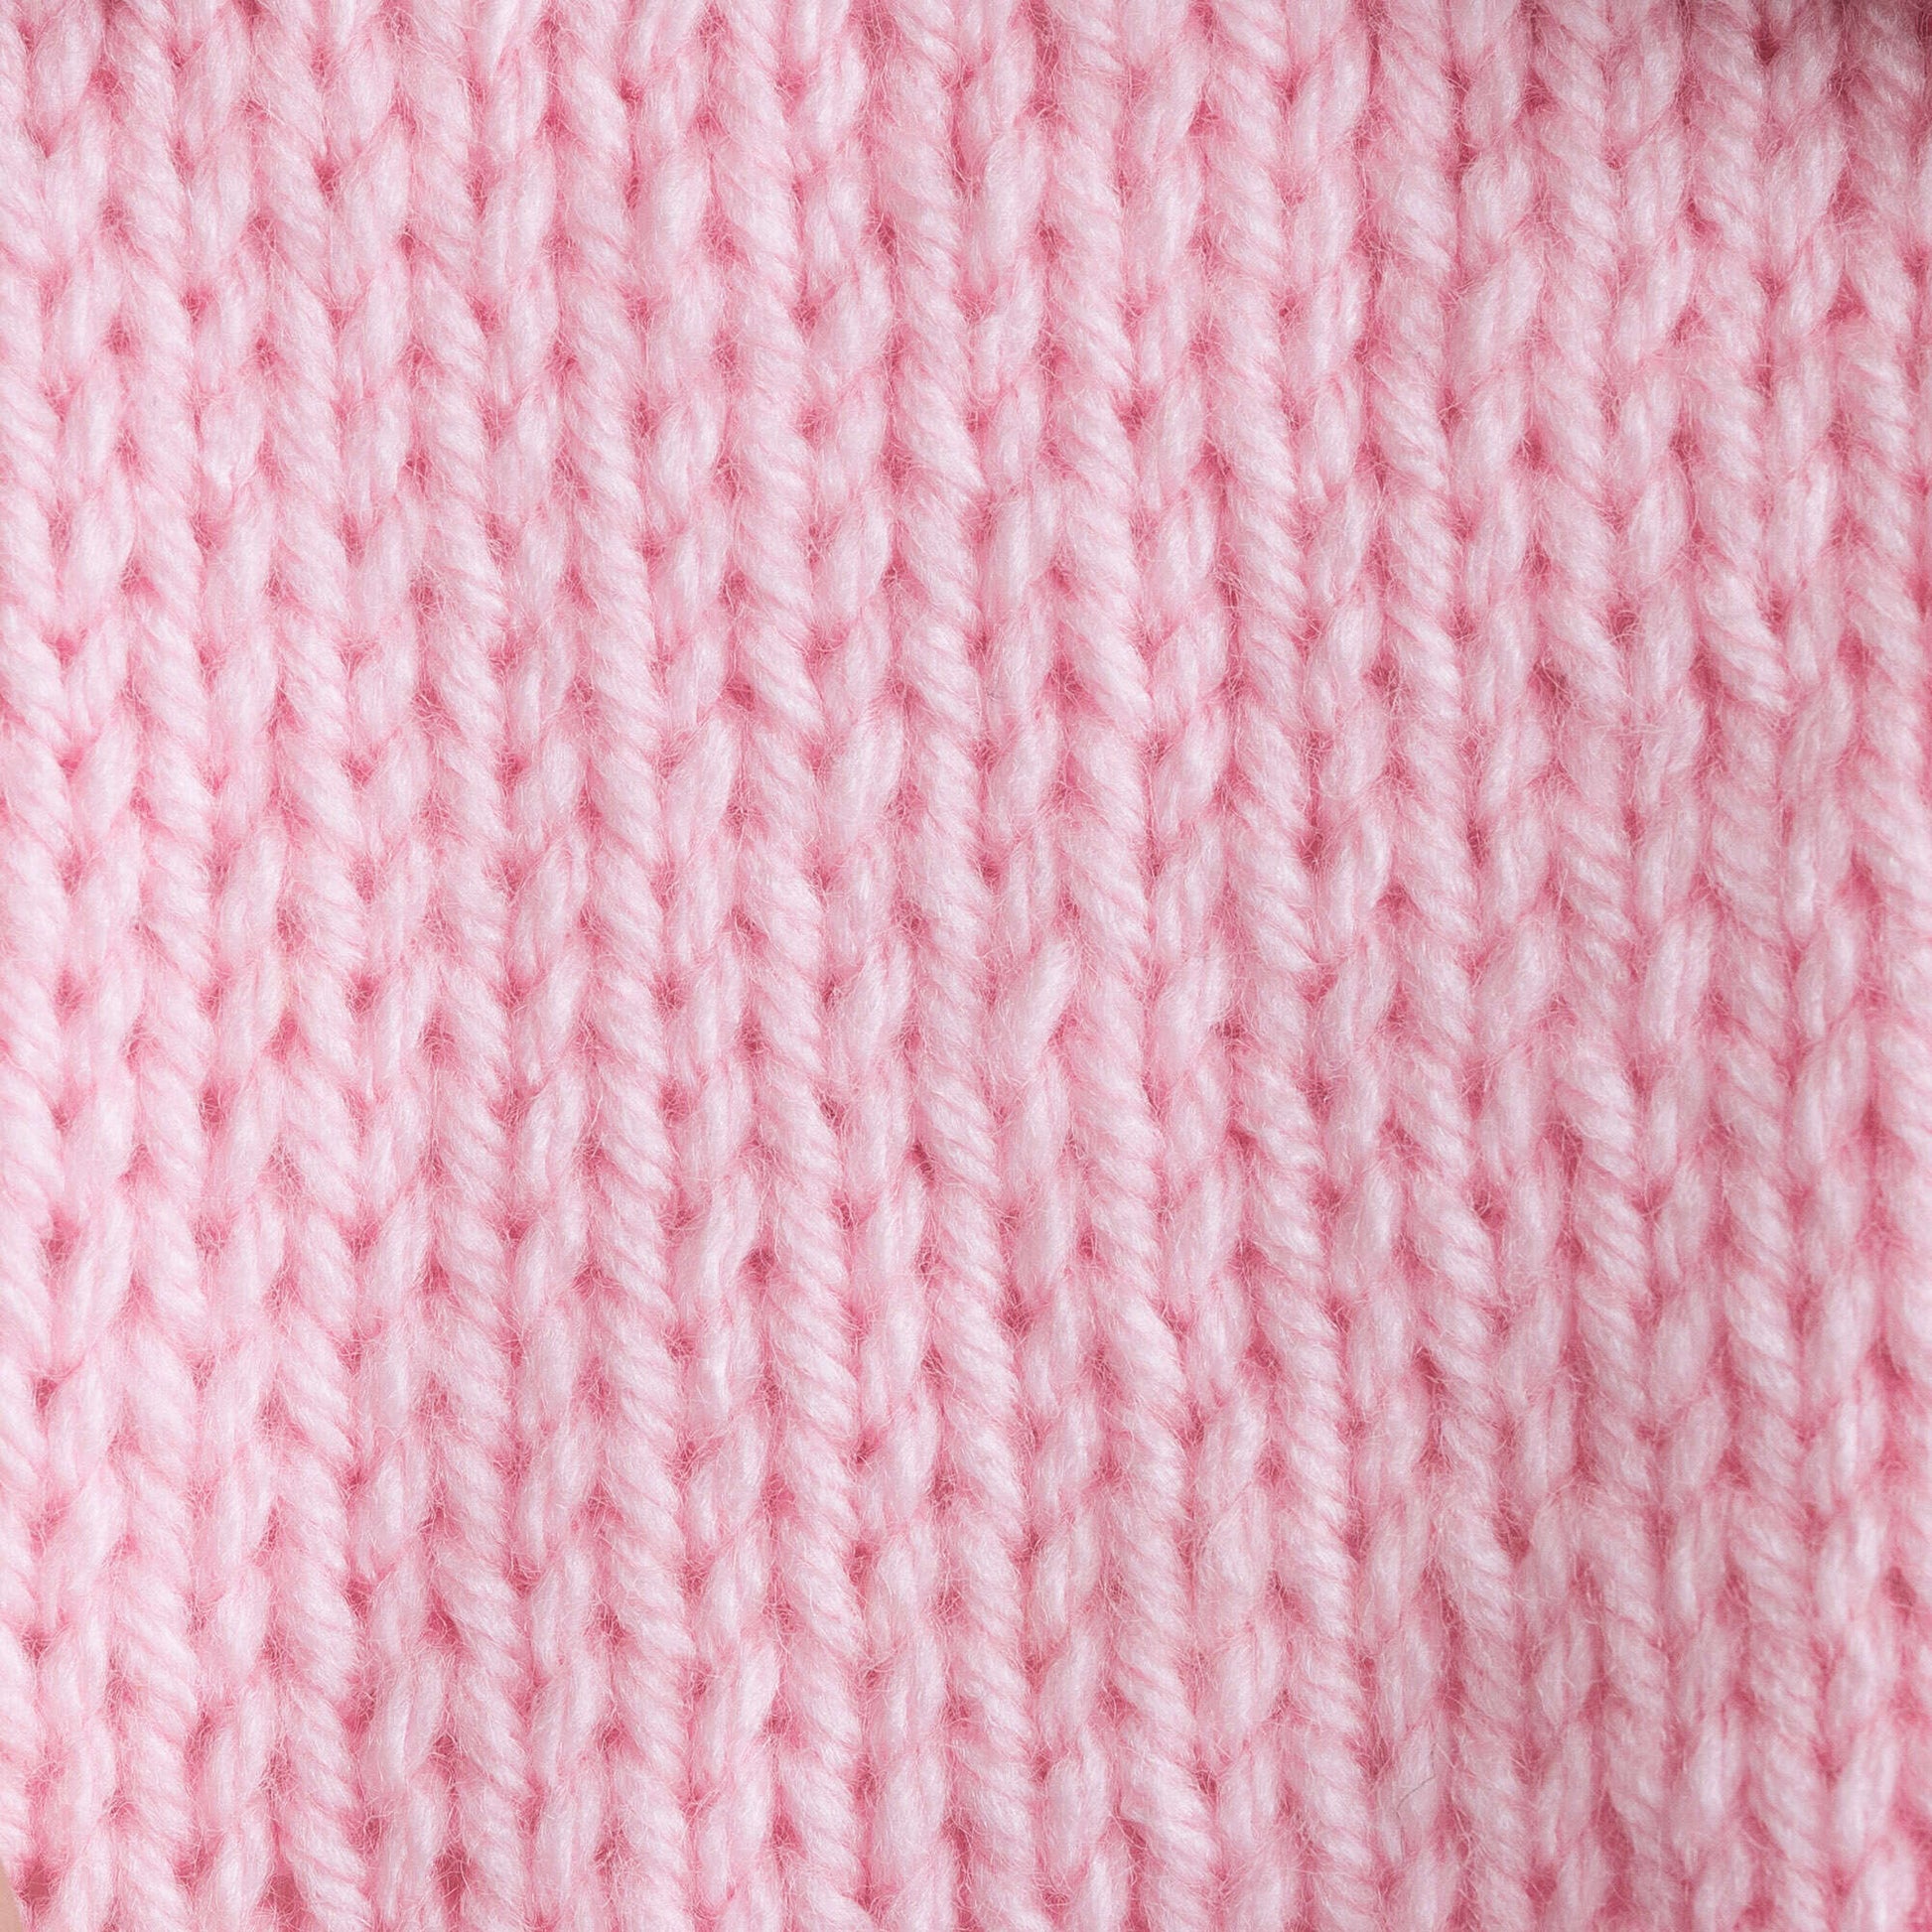 Bernat Super Value Yarn Baby Pink